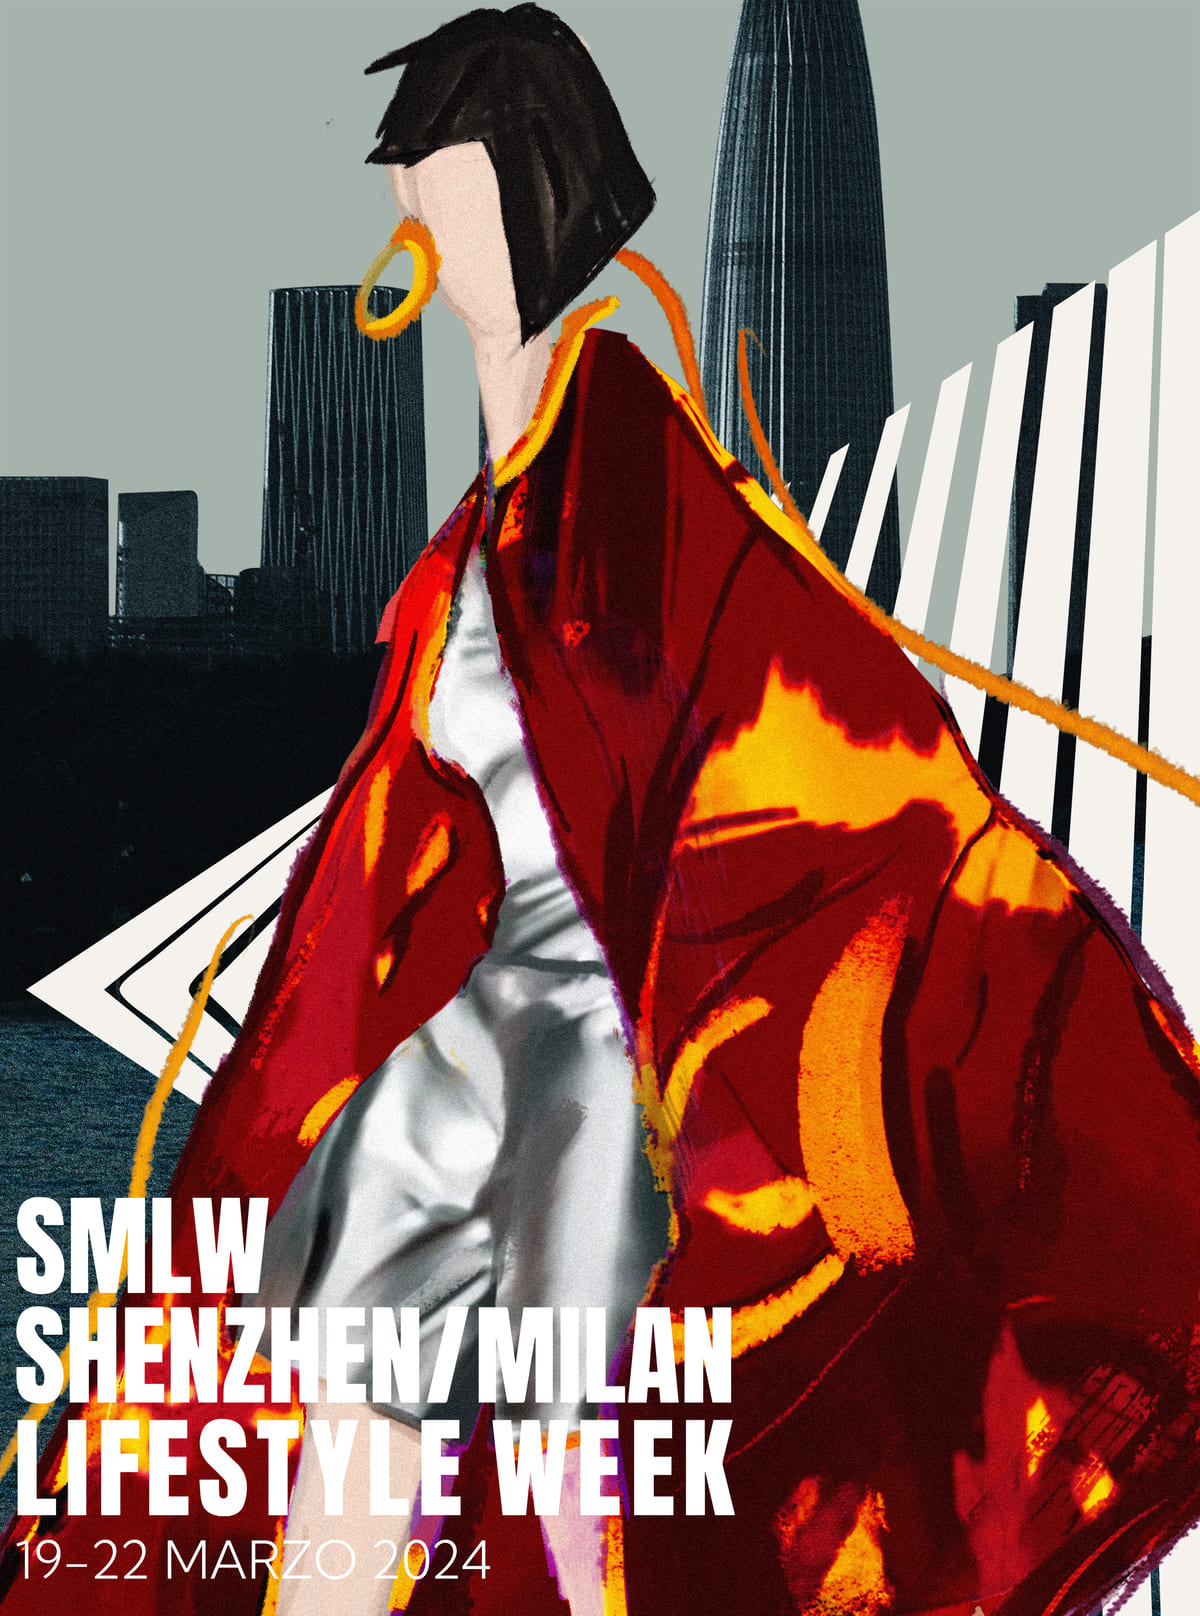 Shenzhen-Milano Lifestyle week (SMLW)